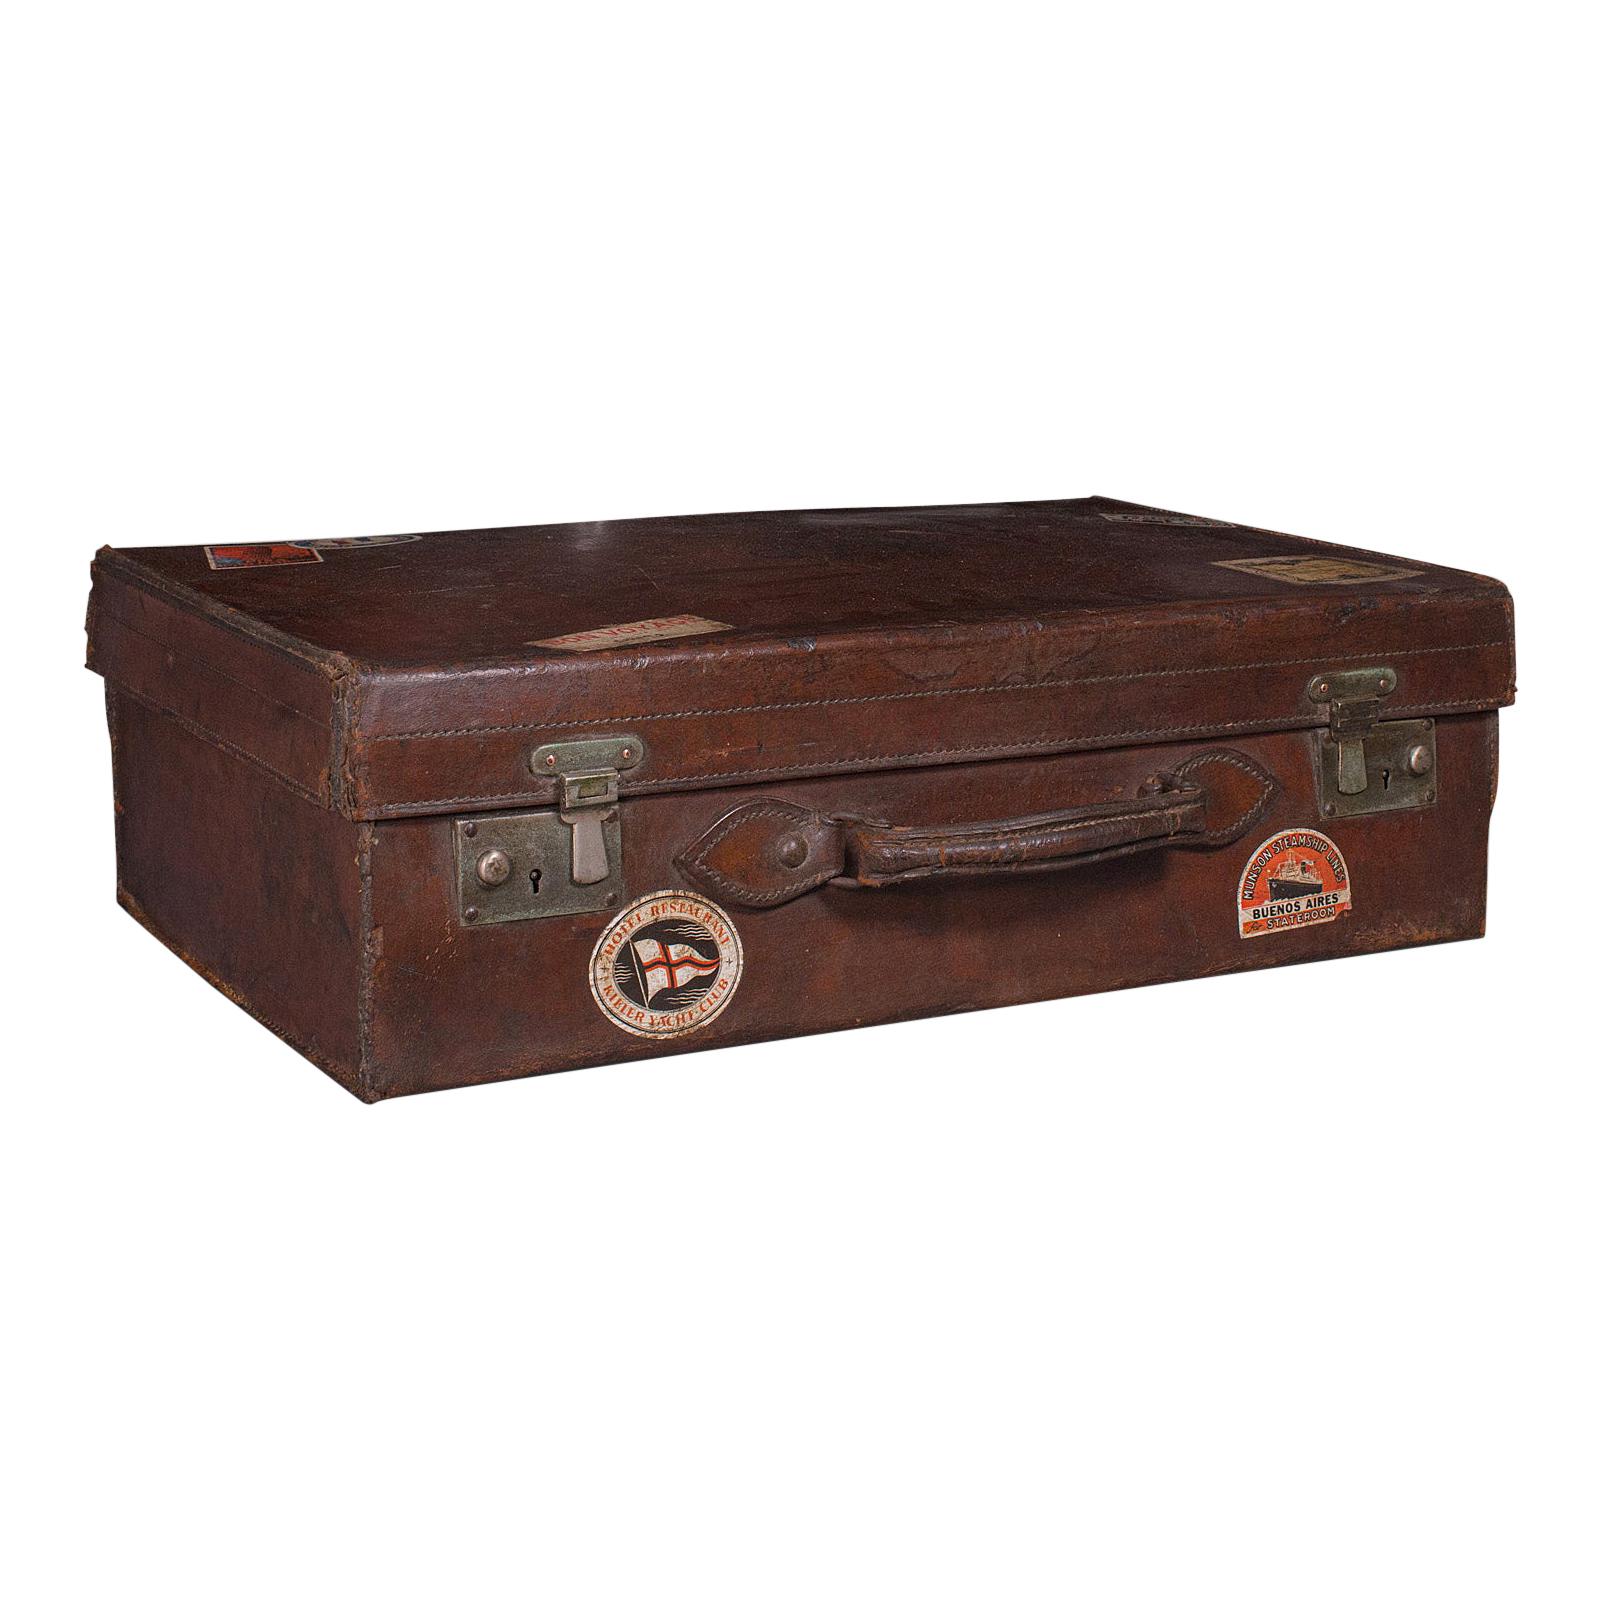 Antique Gentleman's Suitcase, English, Leather, Case, Travel, Edwardian, C.1910